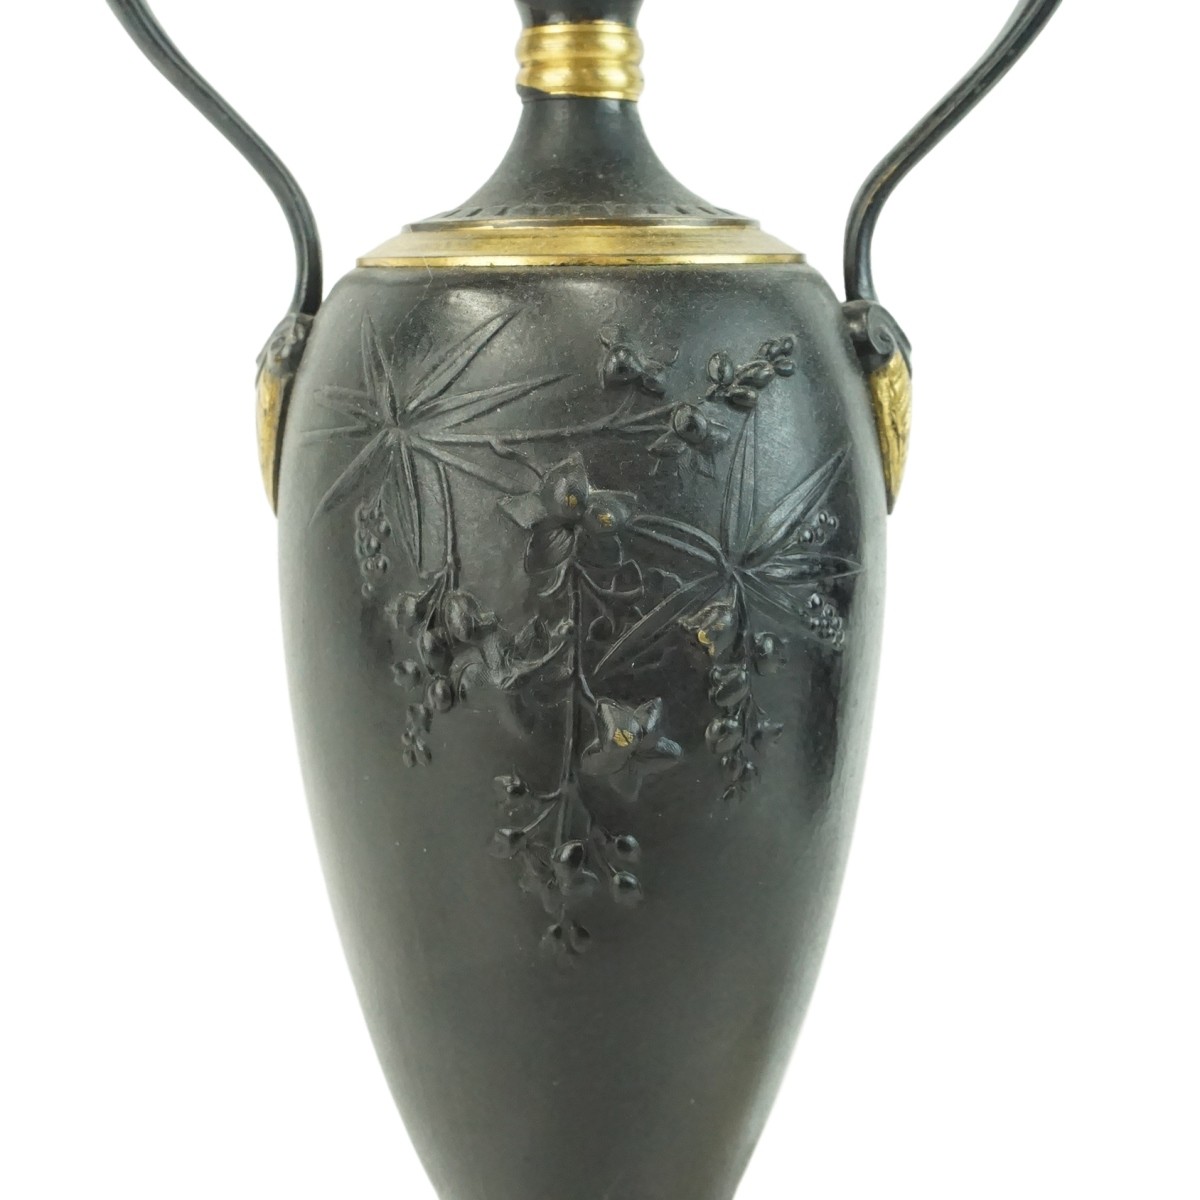 Pr Empire Style Bronze Urn Lamps